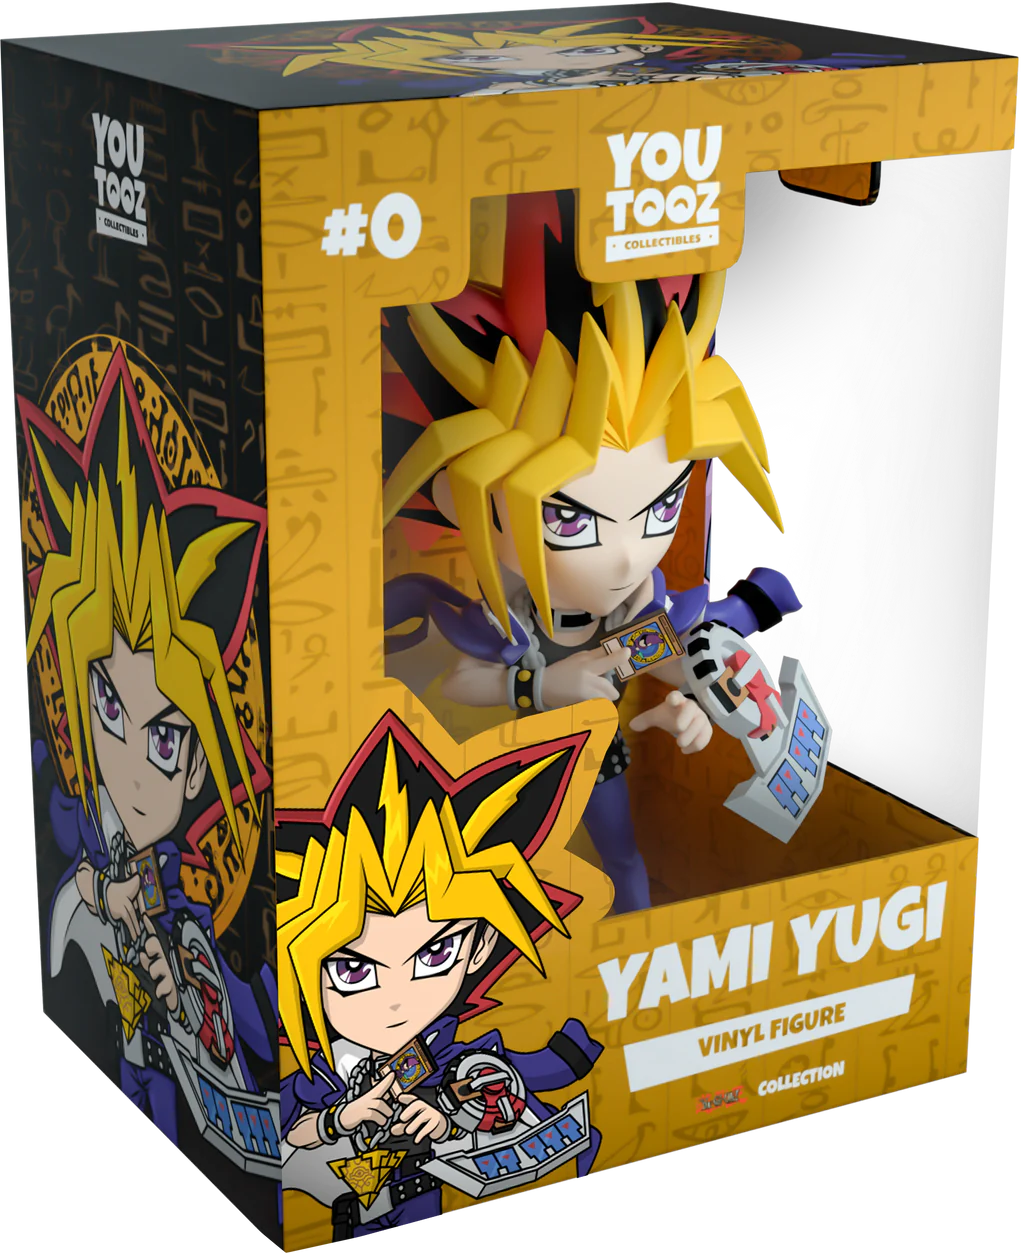 Yu-Gi-Oh! Yami Yugi Youtooz Vinyl Figure